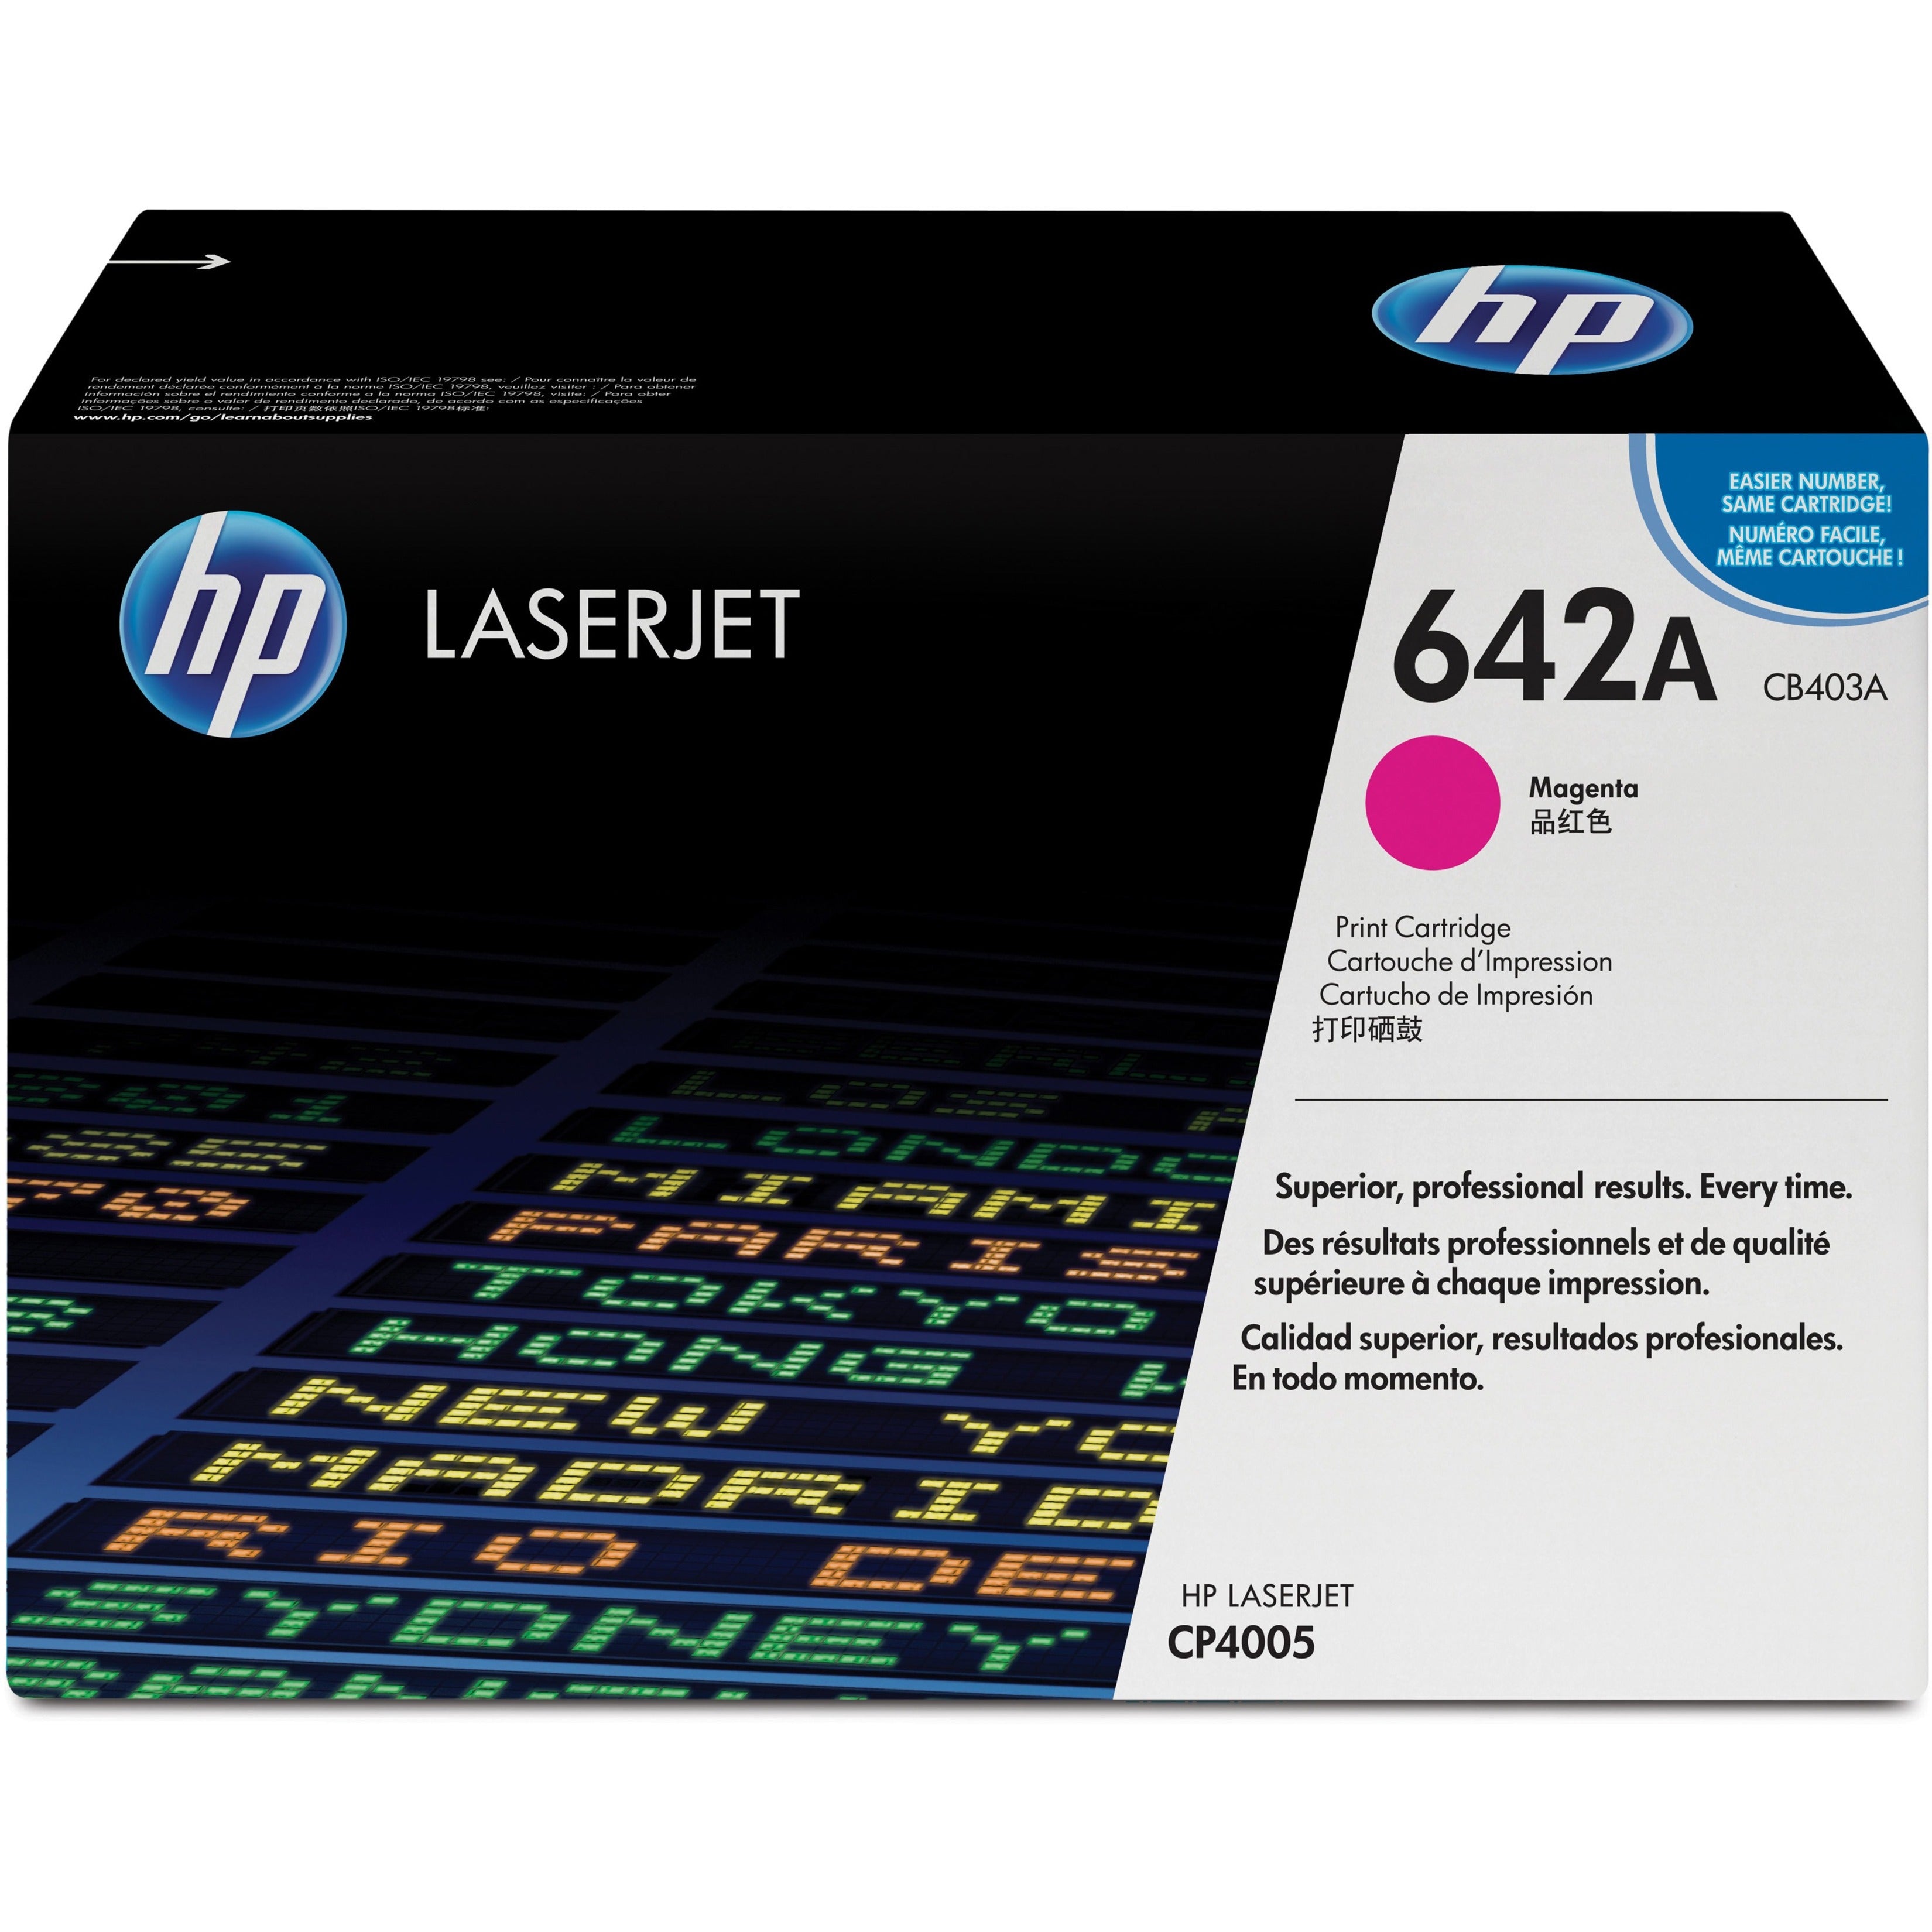 HP CB403A 642A LaserJet Print Cartridge, Magenta, 7500 Page Yield